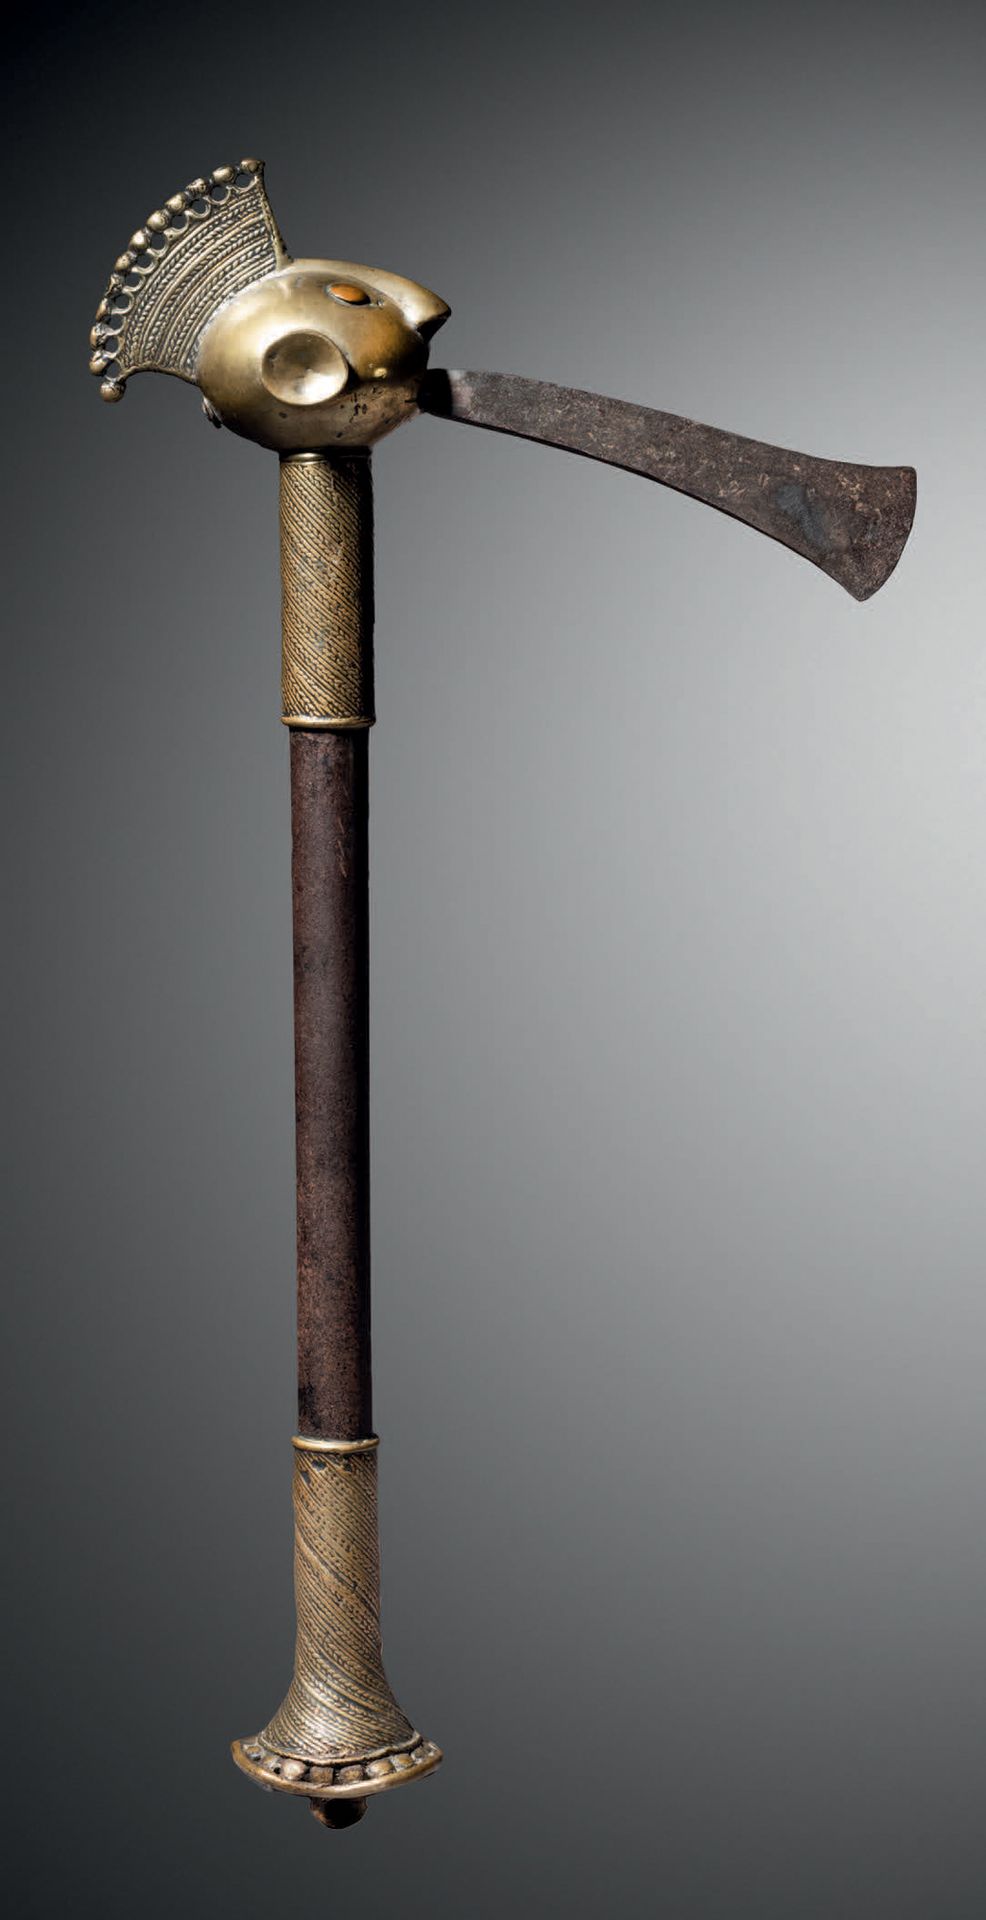 Null Ɵ Tiv权杖，尼日利亚
推测时期：1850 - 1900
铁，黄铜和铜
高48厘米 - 长23.5厘米
Tiv仪式用的锛，尼日利亚
高19英寸 - &hellip;